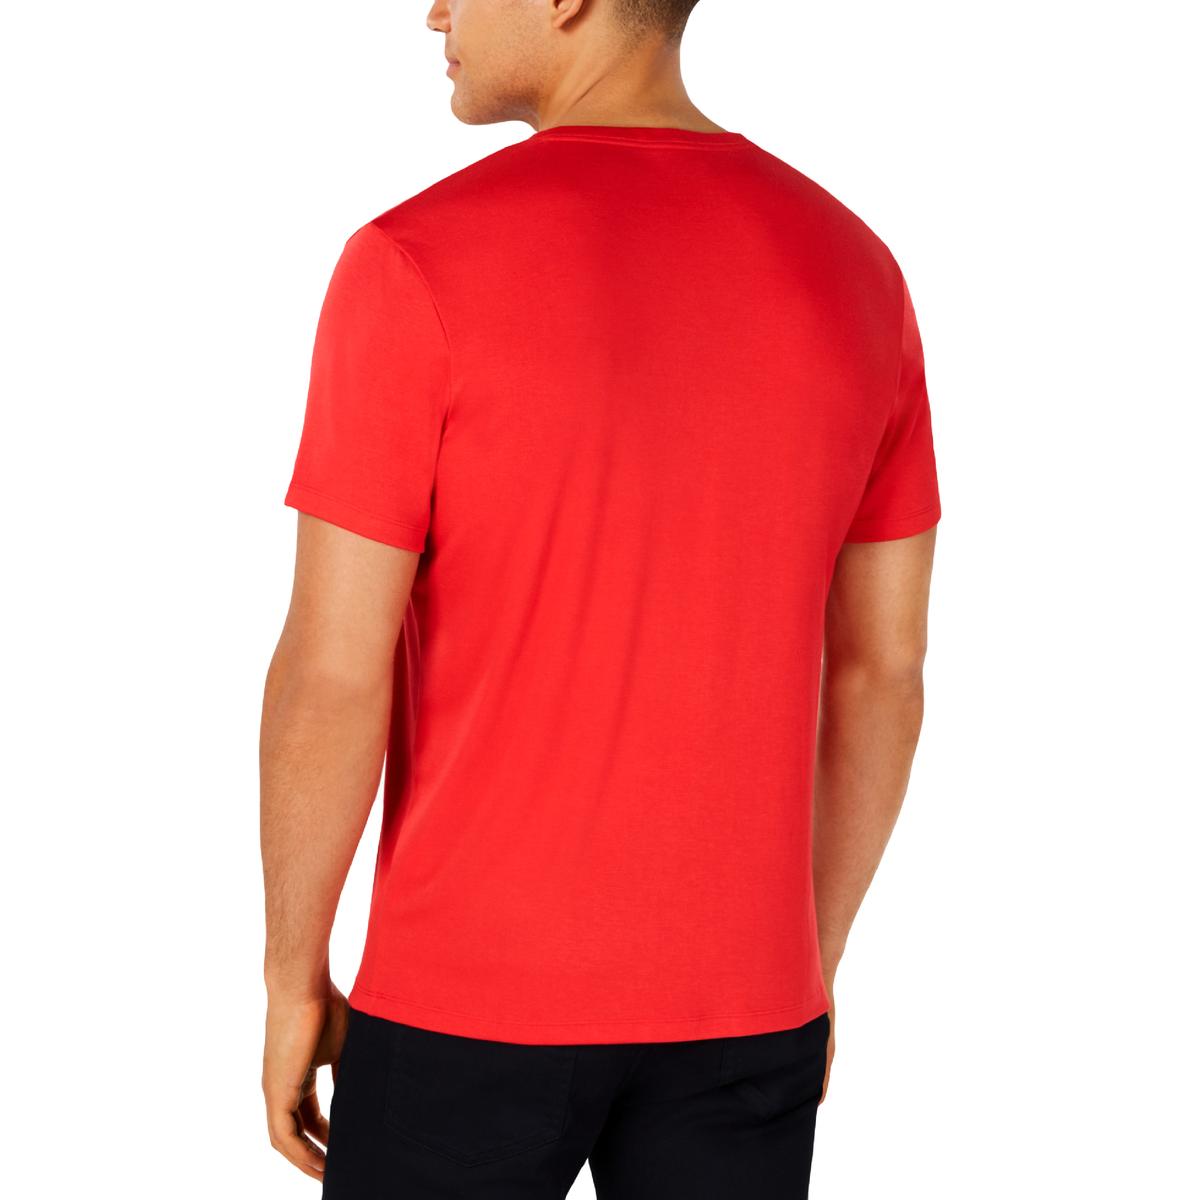 Alfani Mens Red Stretch V-Neck Casual T-Shirt XL BHFO 3910 | eBay